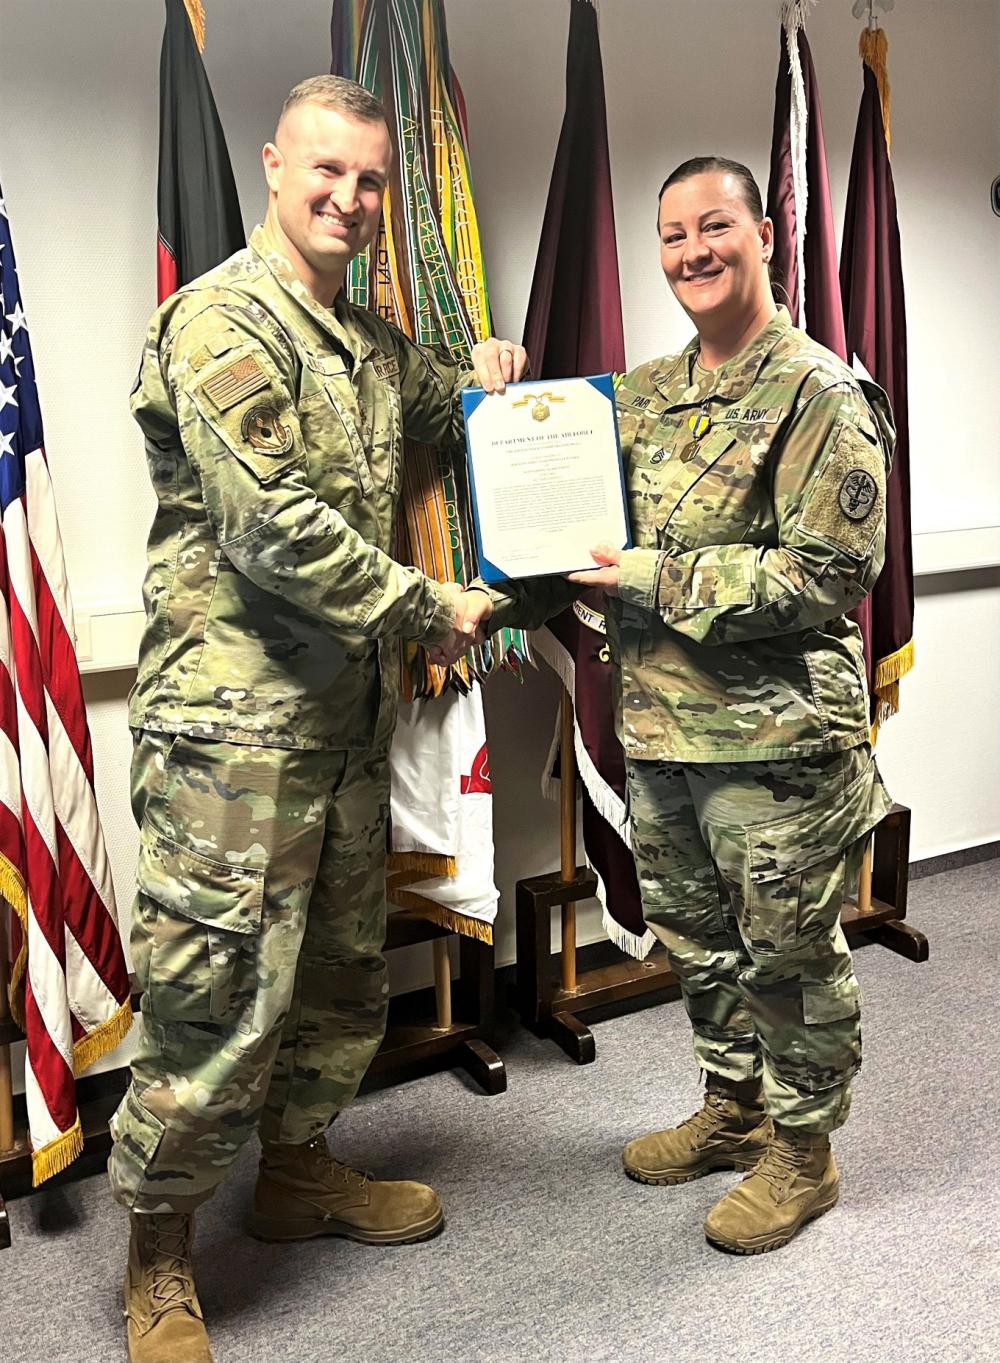 Army Combat Medic receives USAF Award for heroic lifesaving actions